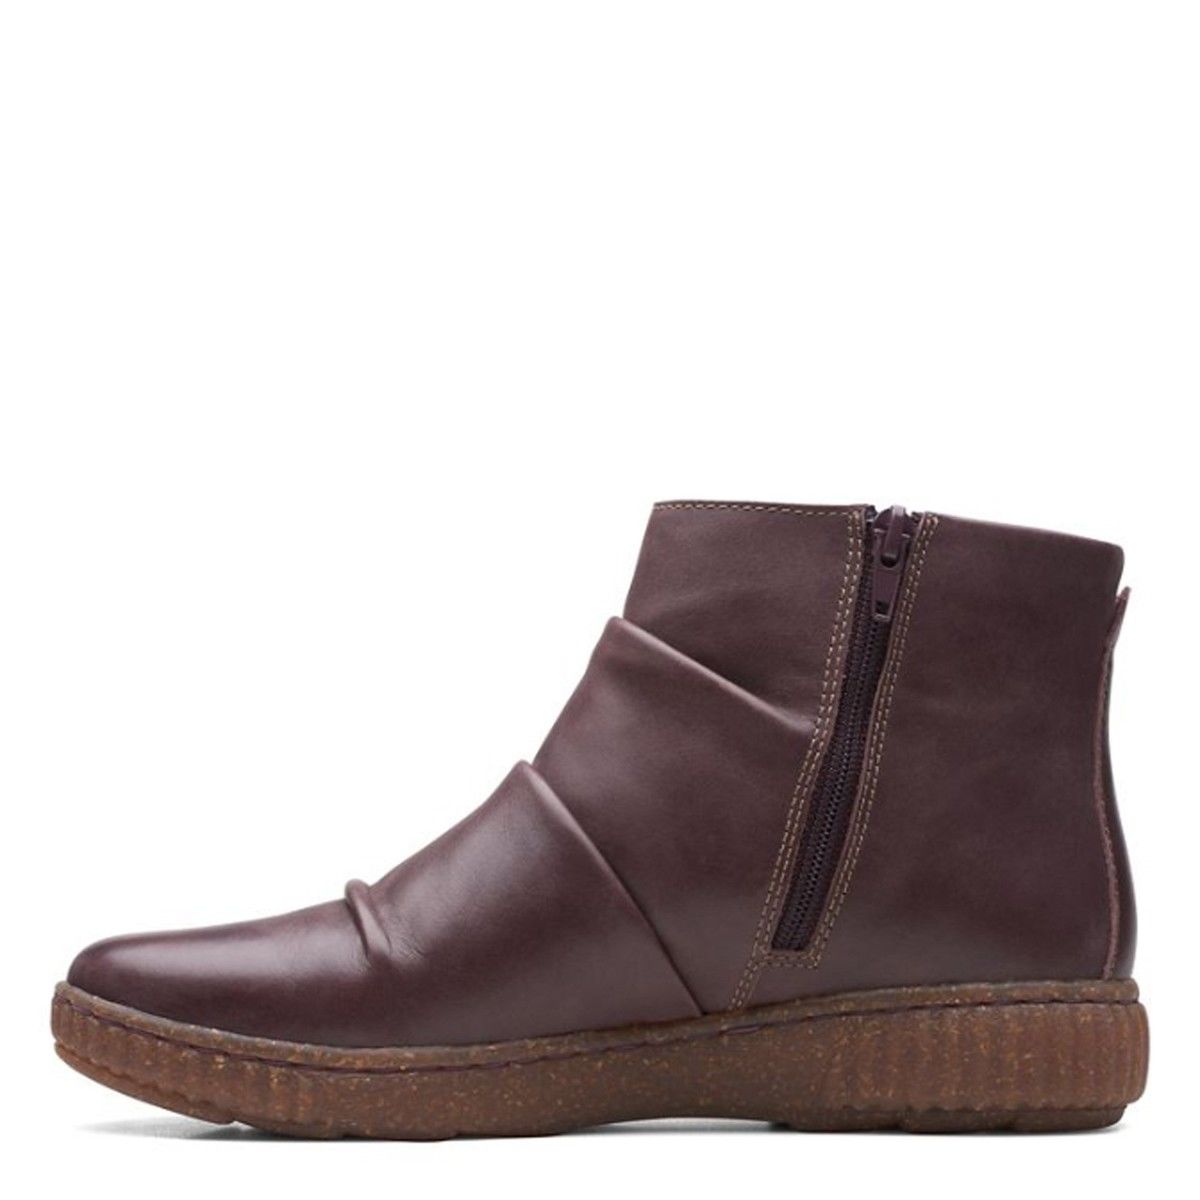 Clarks Caroline Rae D Fit Burgundy Leather Ankle Boots